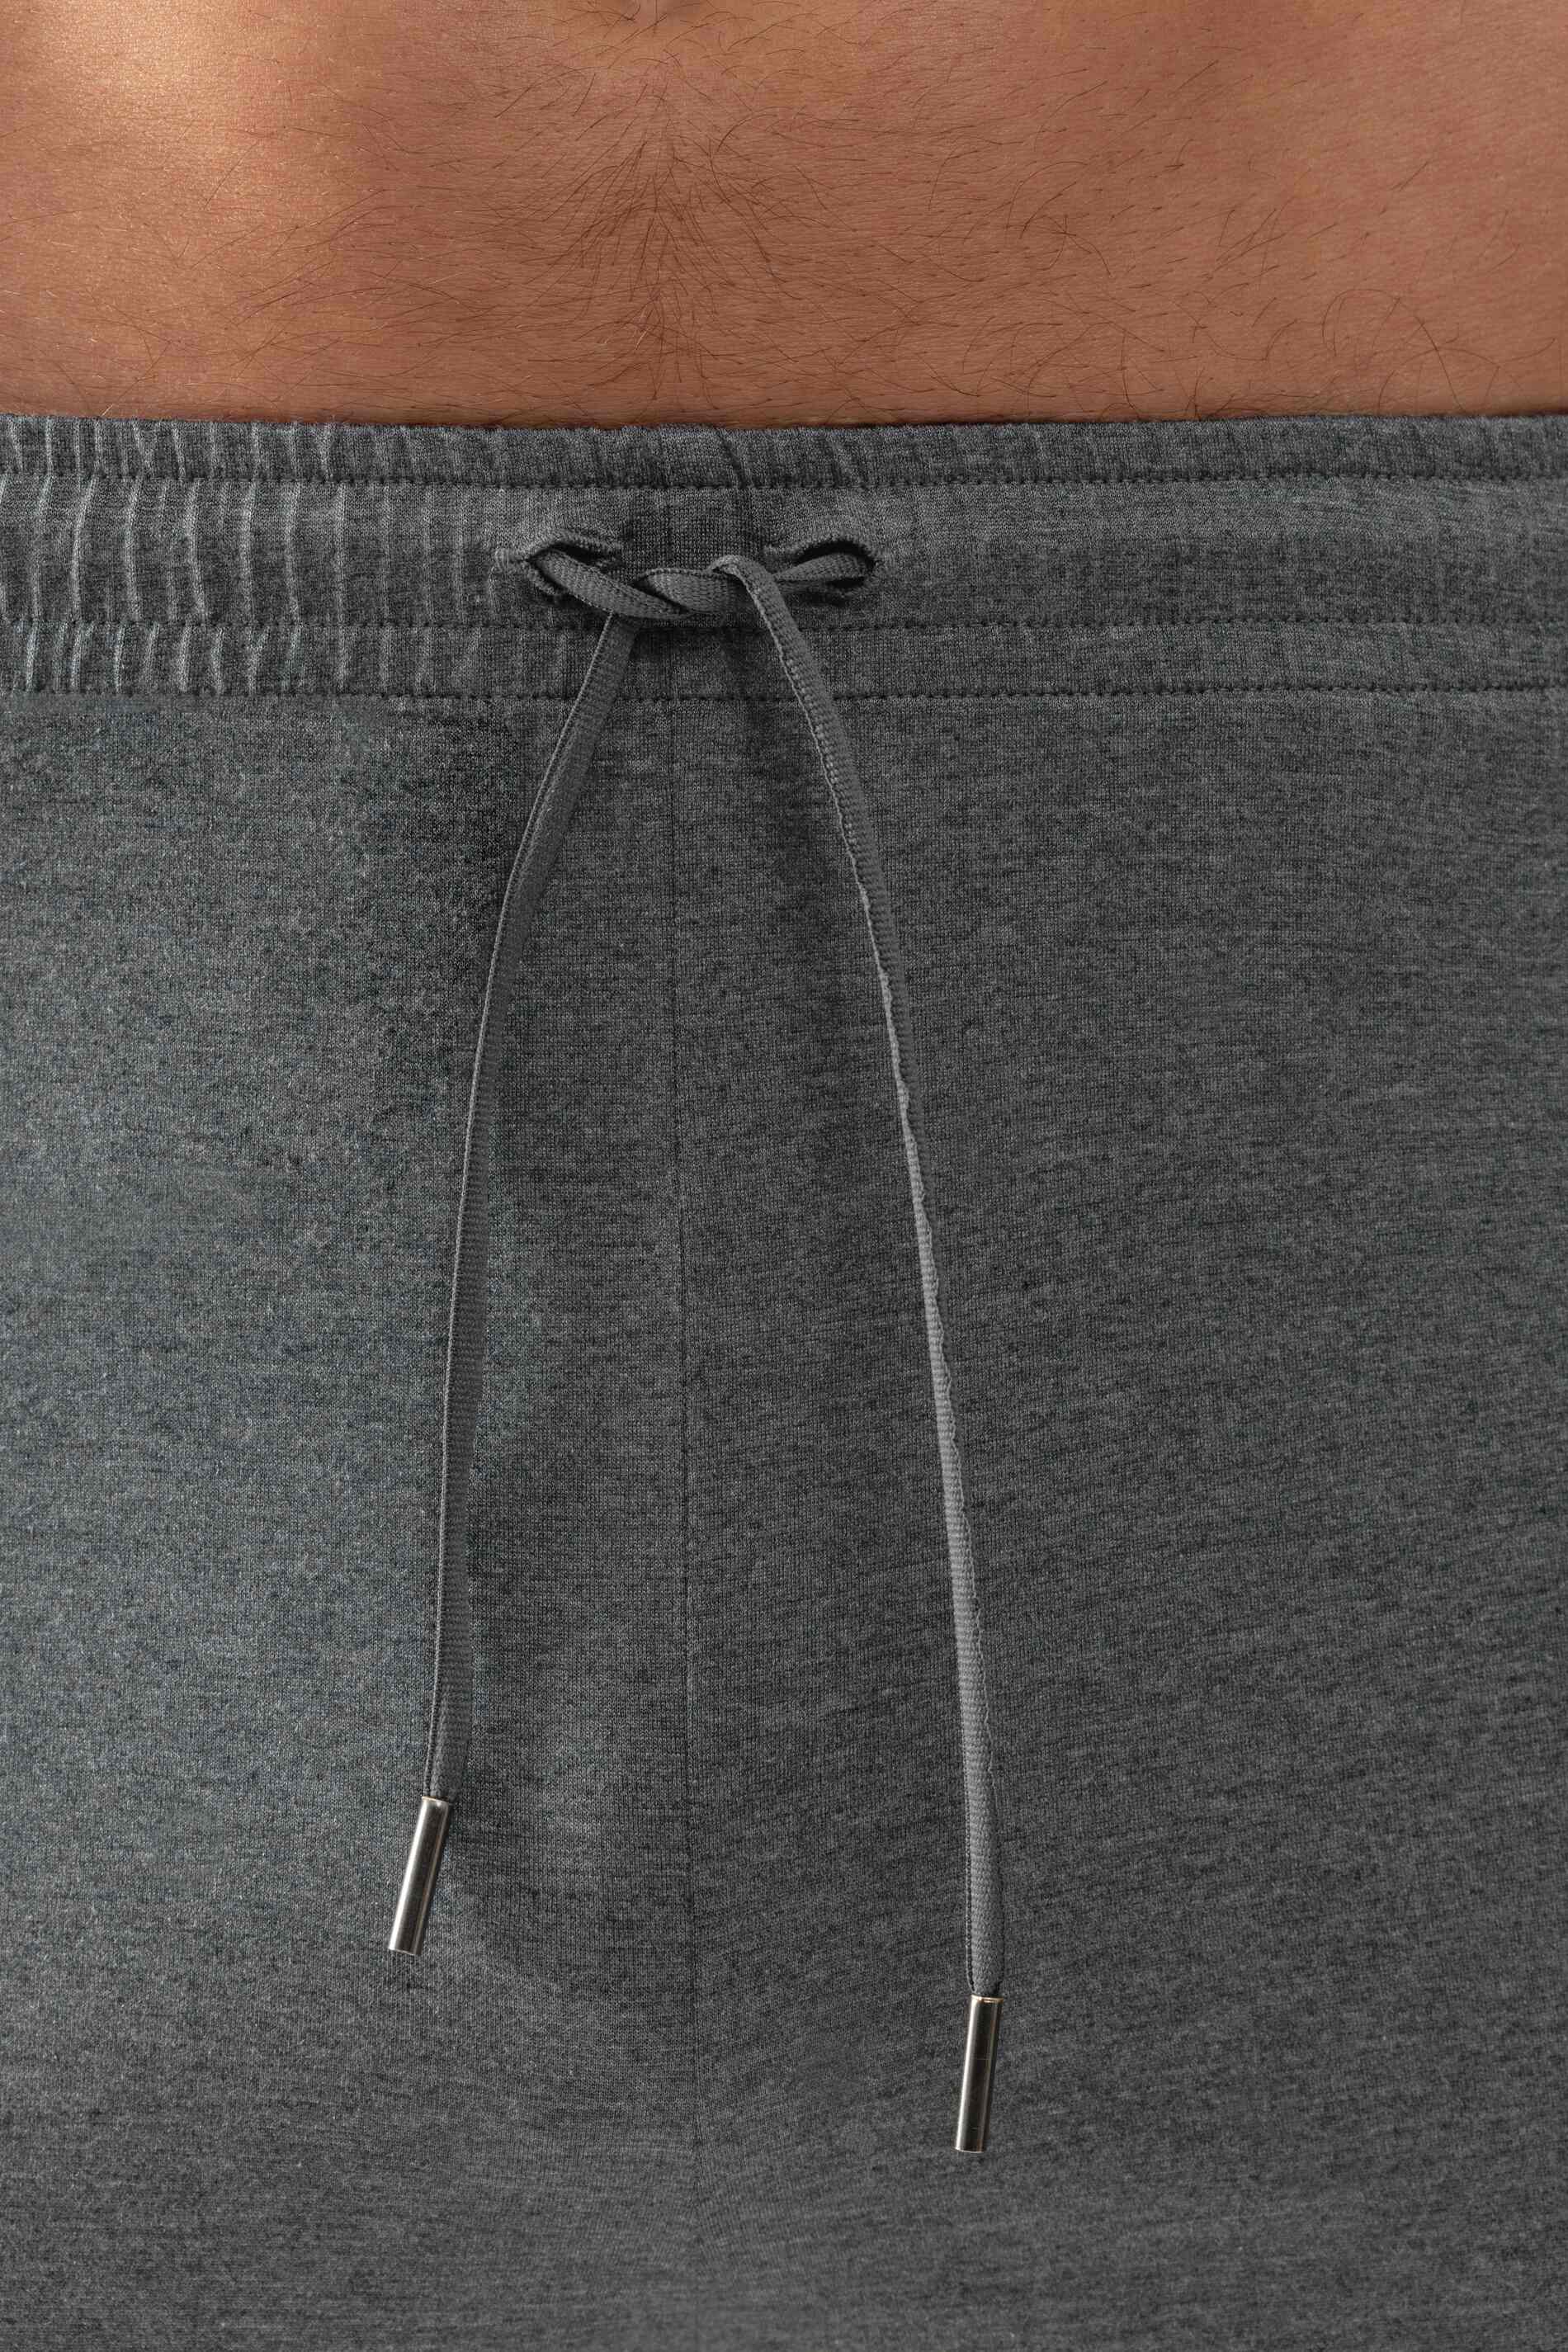 Short pants Serie Inverness Detail View 01 | mey®